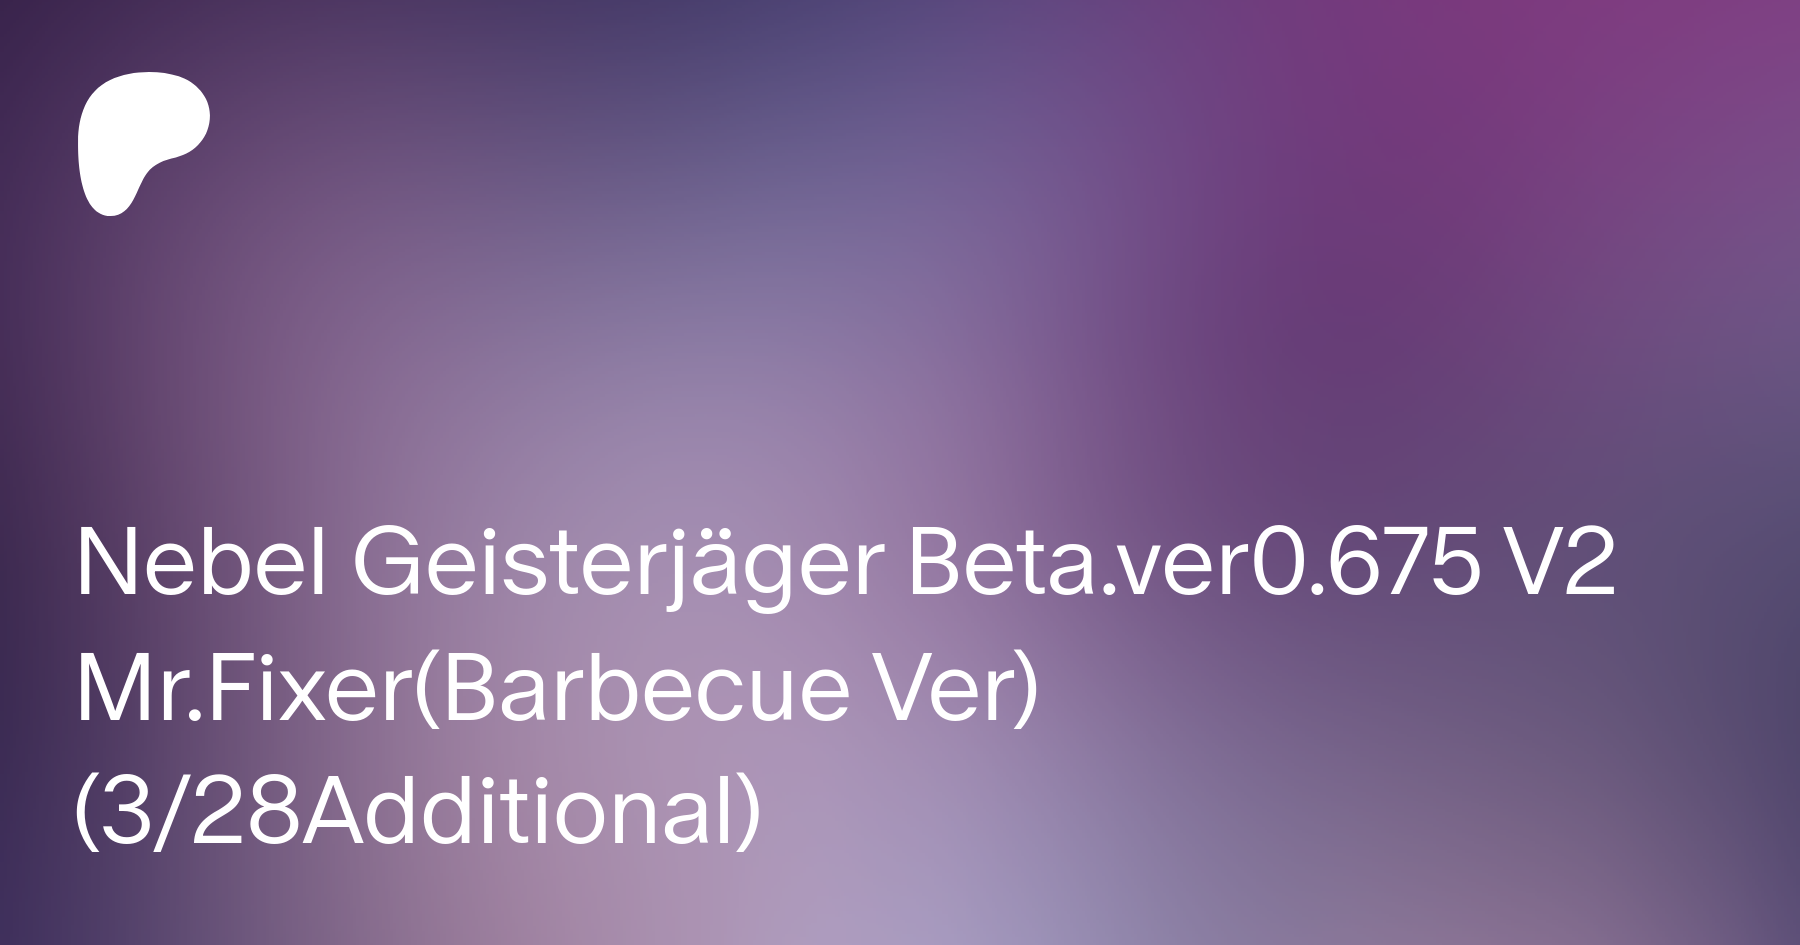 Nebel Geisterjäger Beta.ver0.675 V2 Mr.Fixer(Barbecue Ver)(328Additional)  | Patreon